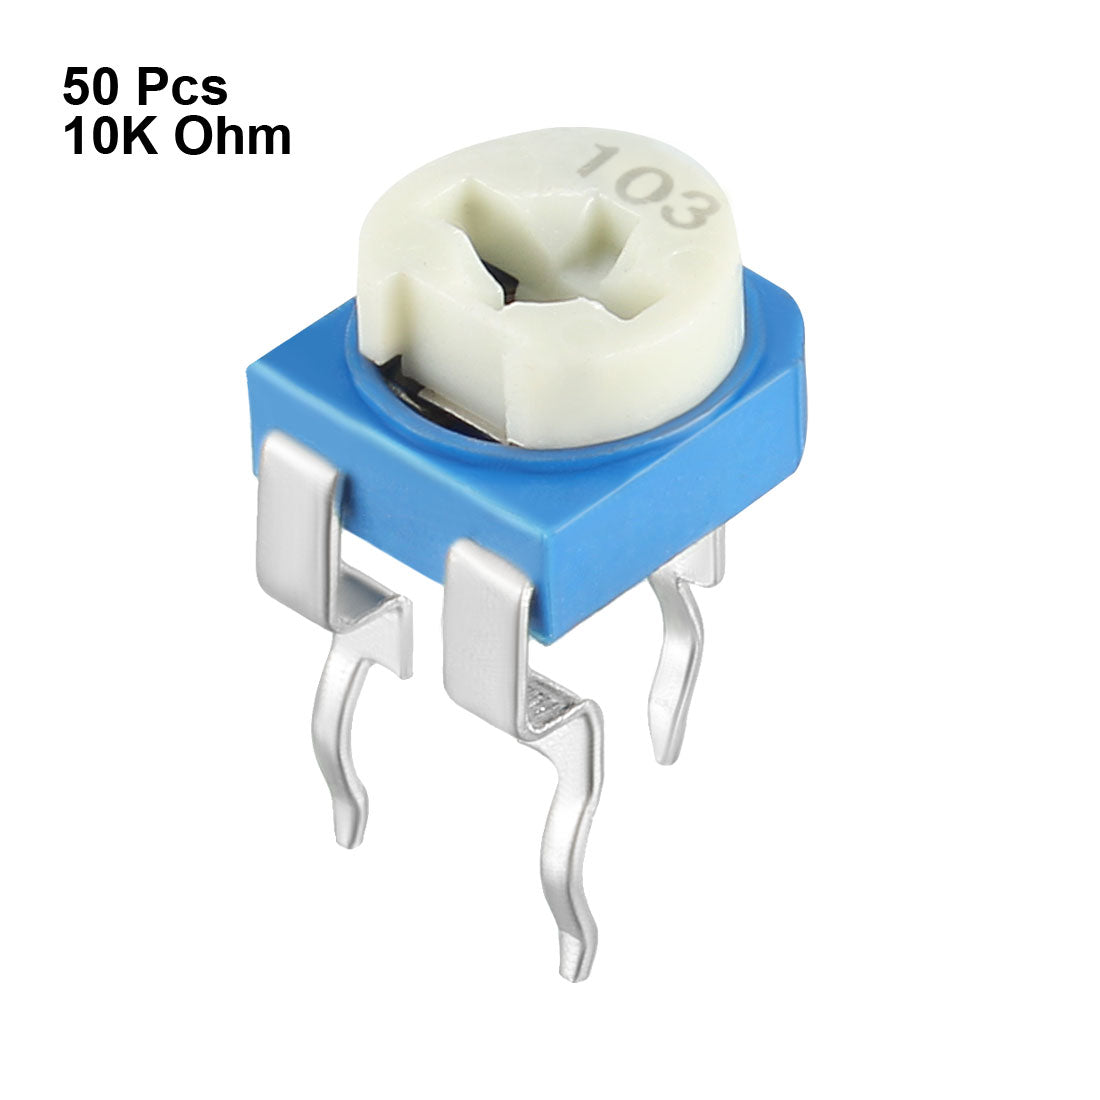 uxcell Uxcell 50 Pcs 10K Ohm Variable Resistors Top Adjustable Horizontal Cermet Potentiometer